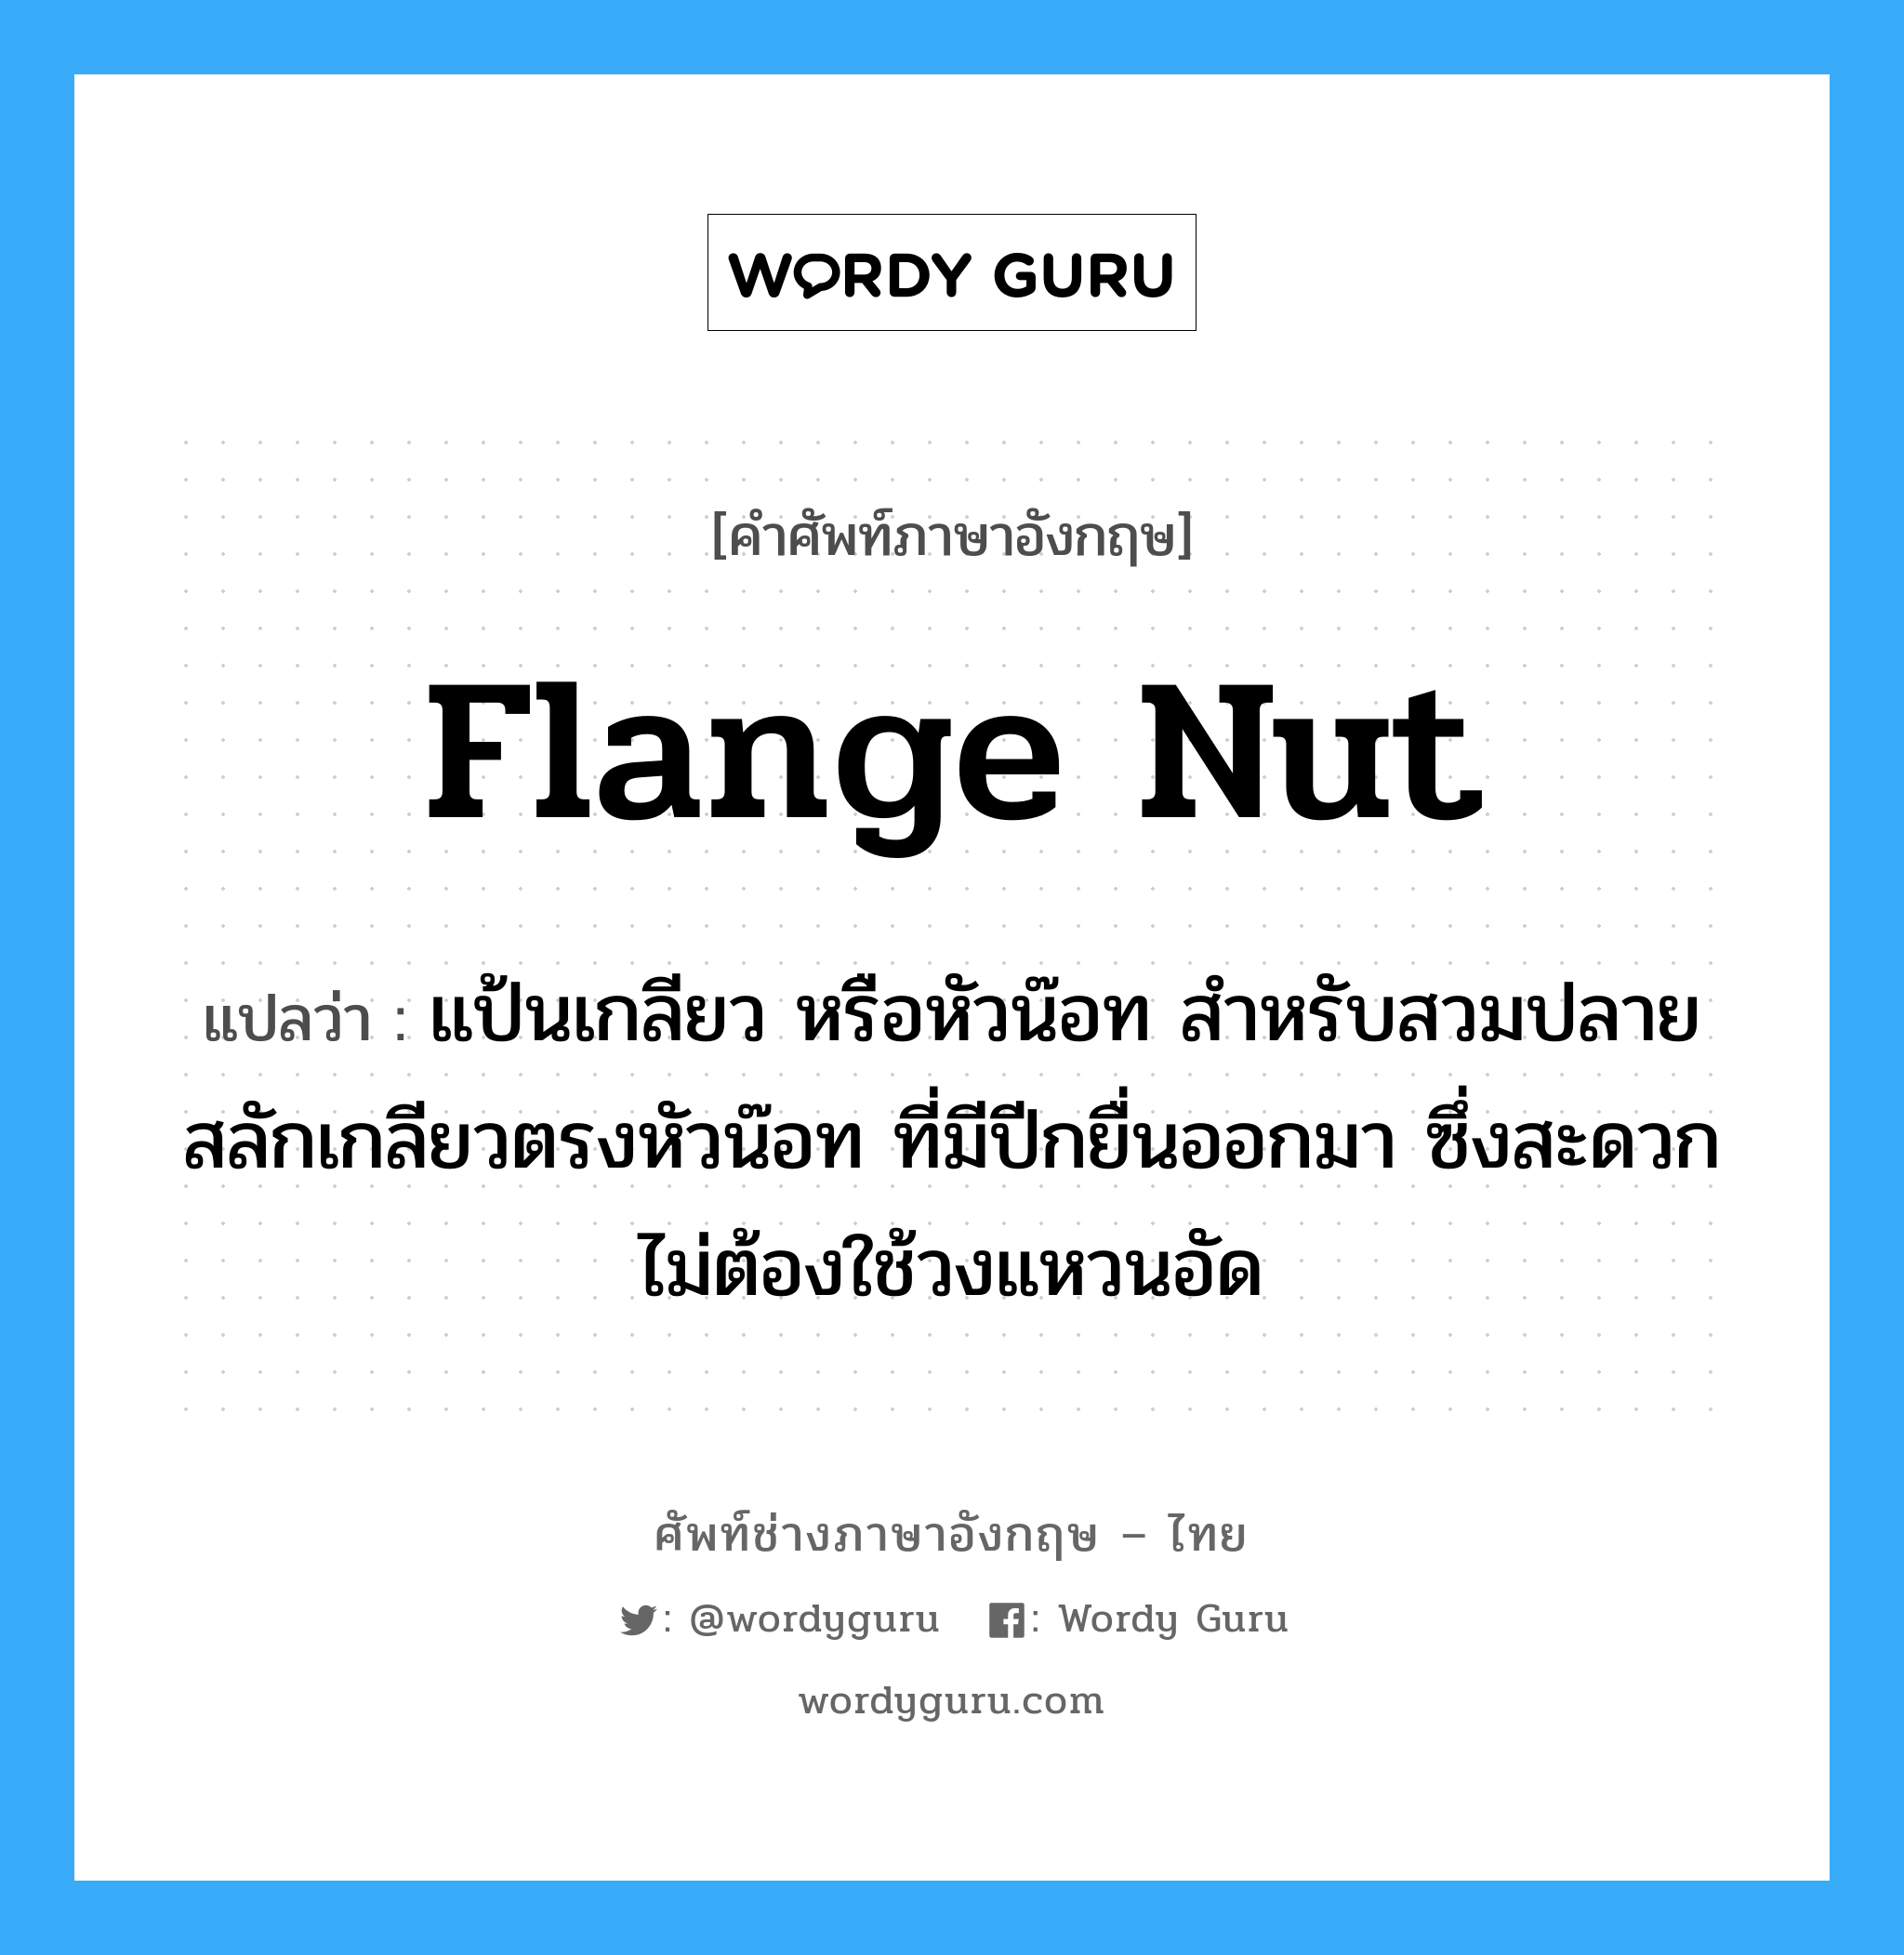 flange nut แปลว่า?, คำศัพท์ช่างภาษาอังกฤษ - ไทย flange nut คำศัพท์ภาษาอังกฤษ flange nut แปลว่า แป้นเกลียว หรือหัวน๊อท สำหรับสวมปลายสลักเกลียวตรงหัวน๊อท ที่มีปีกยื่นออกมา ซึ่งสะดวกไม่ต้องใช้วงแหวนอัด